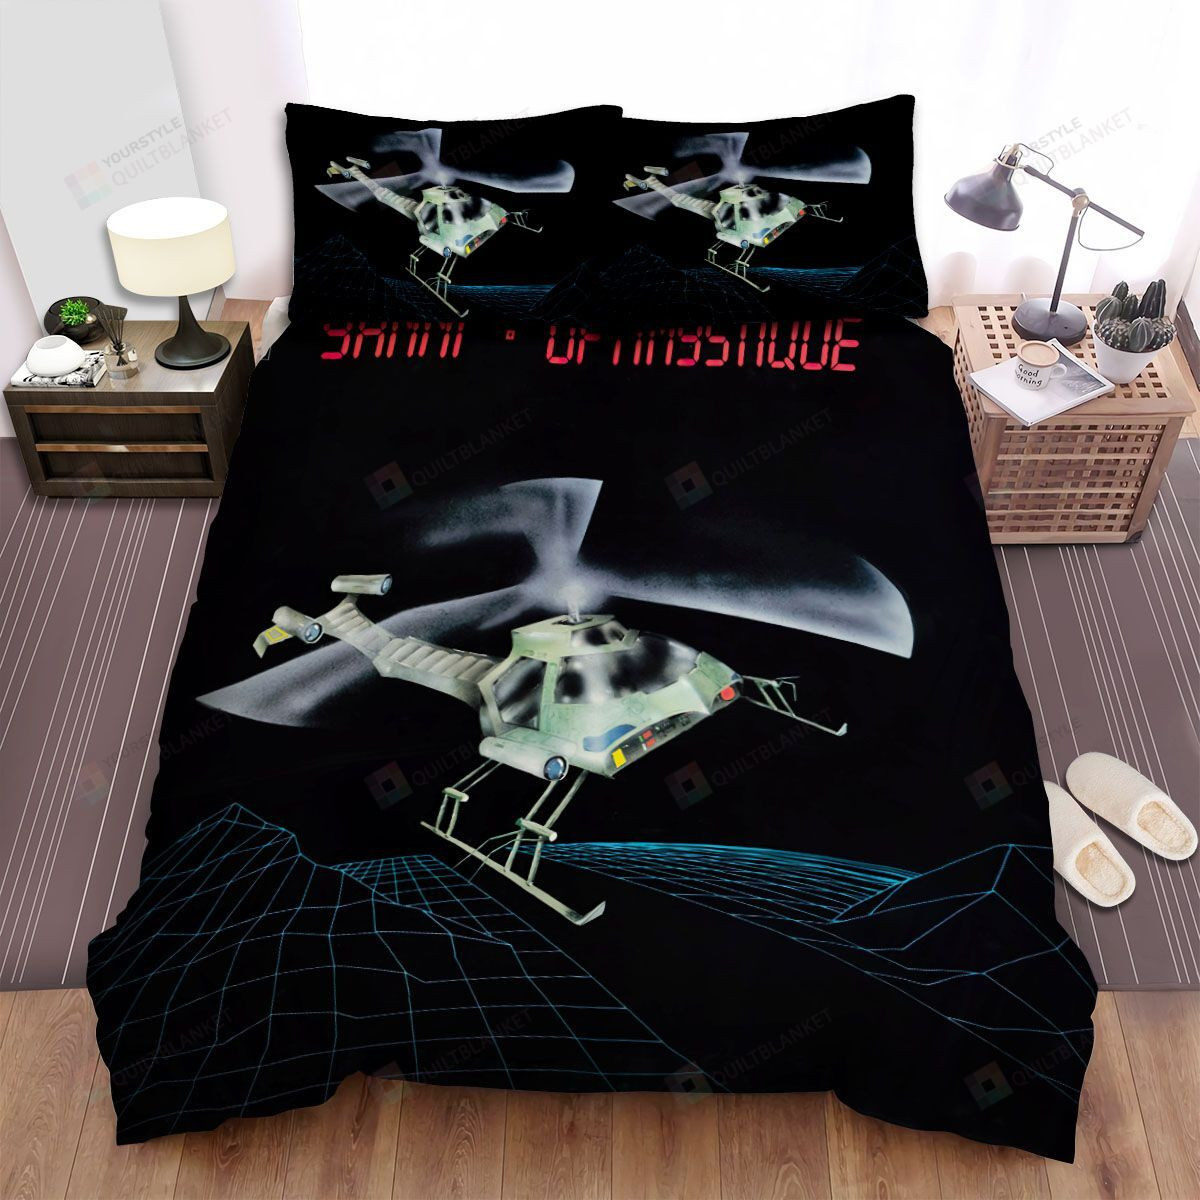 Yanni Optimystique Airplane Album Cover Bed Sheets Spread Comforter Duvet Cover Bedding Sets